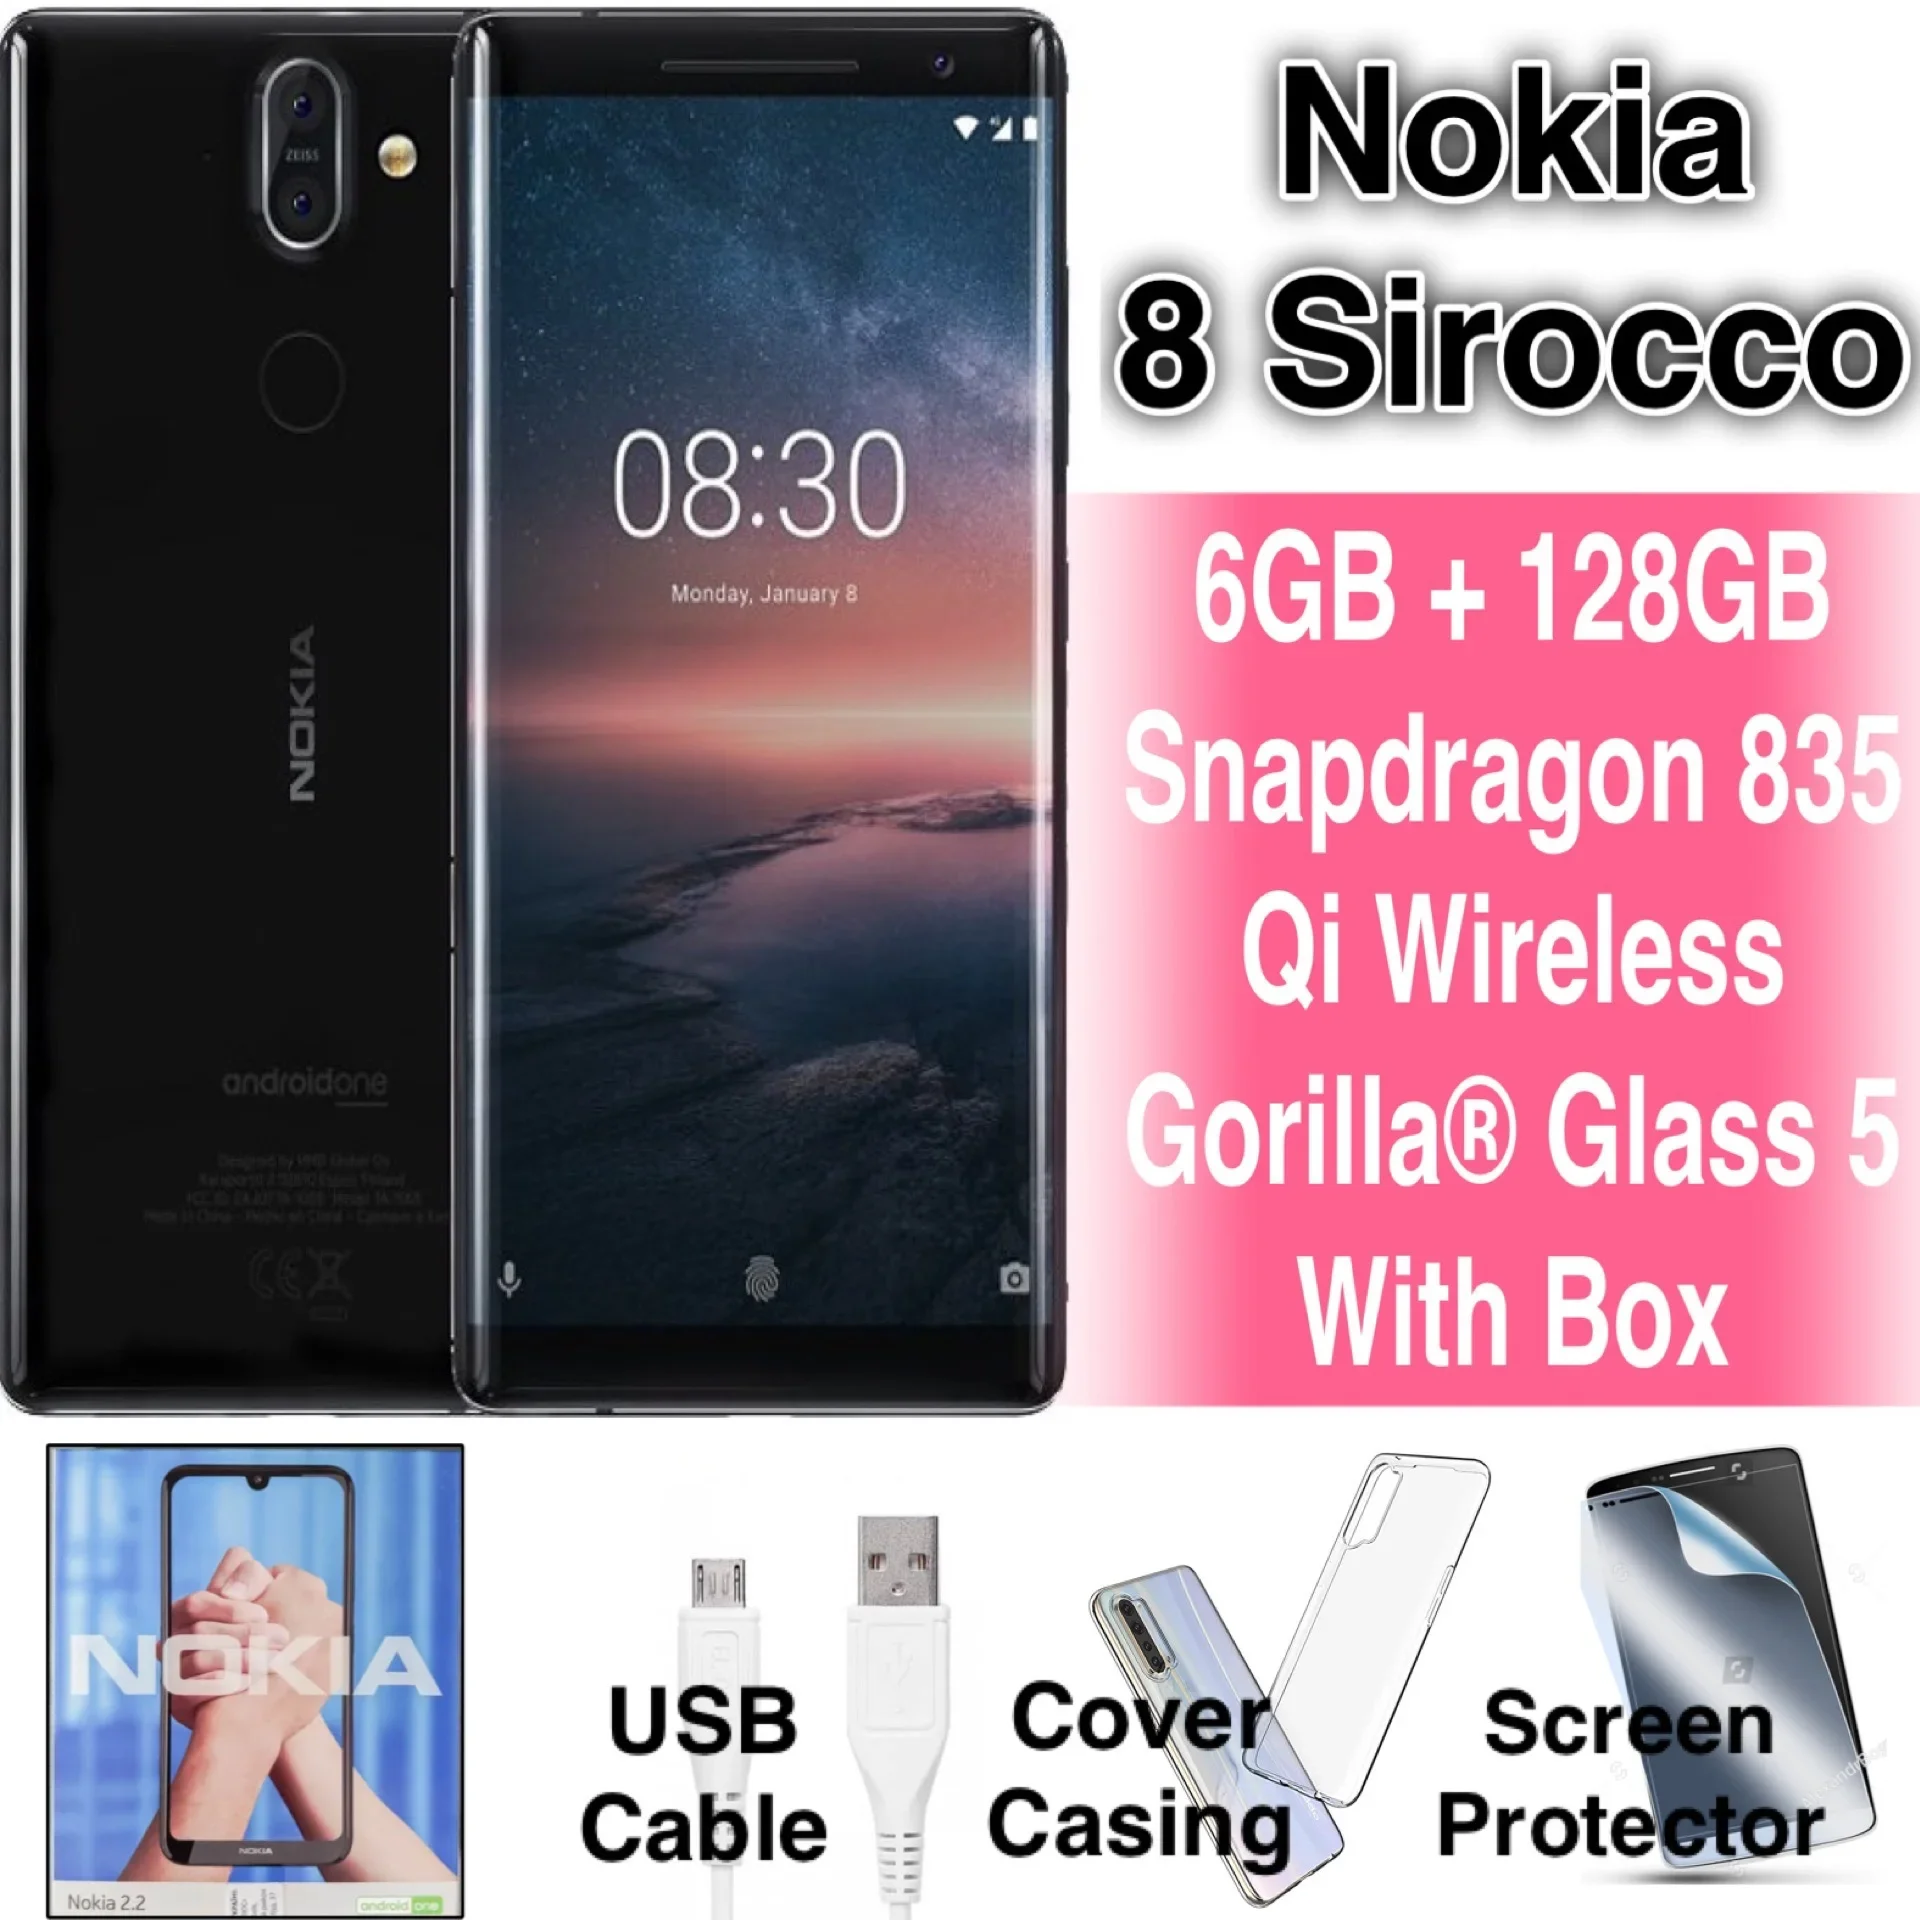 {100% Original} Nokia 8 Sirocco (128GB + 6GB Ram) Snapdragon 835 - 2nd with box